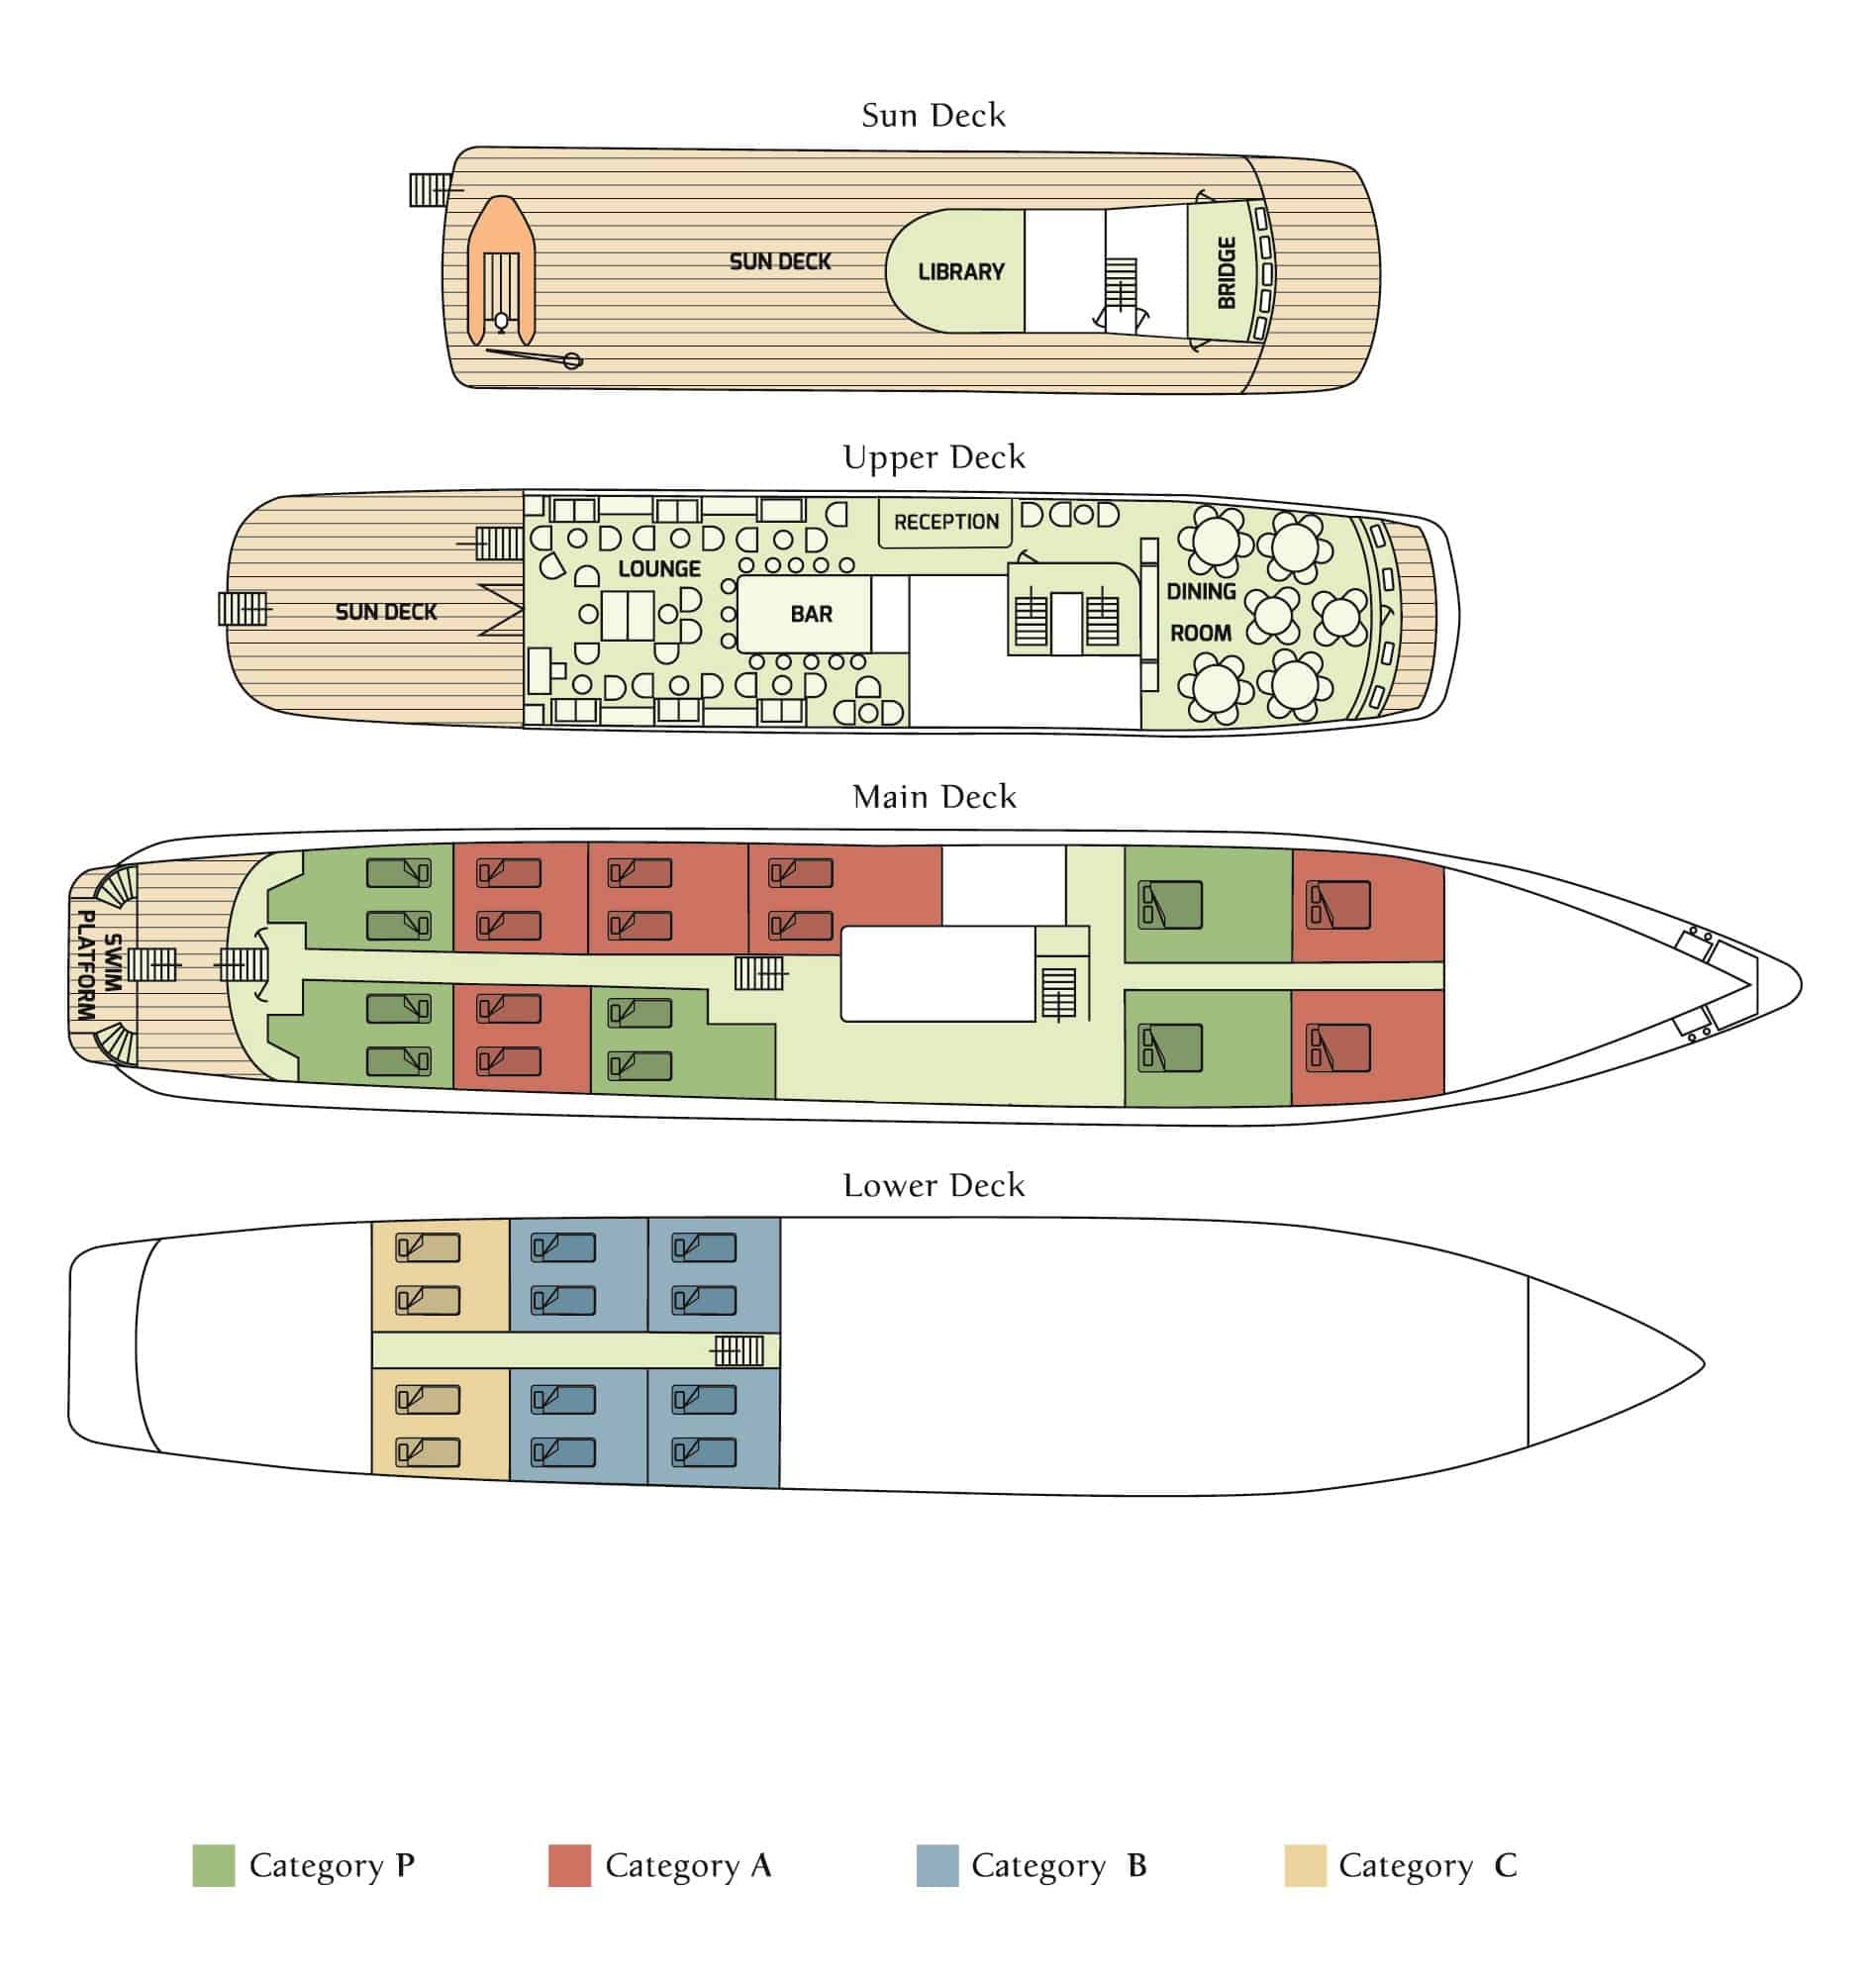 Callisto Deck Plan showing lower, main, upper, and sun decks.